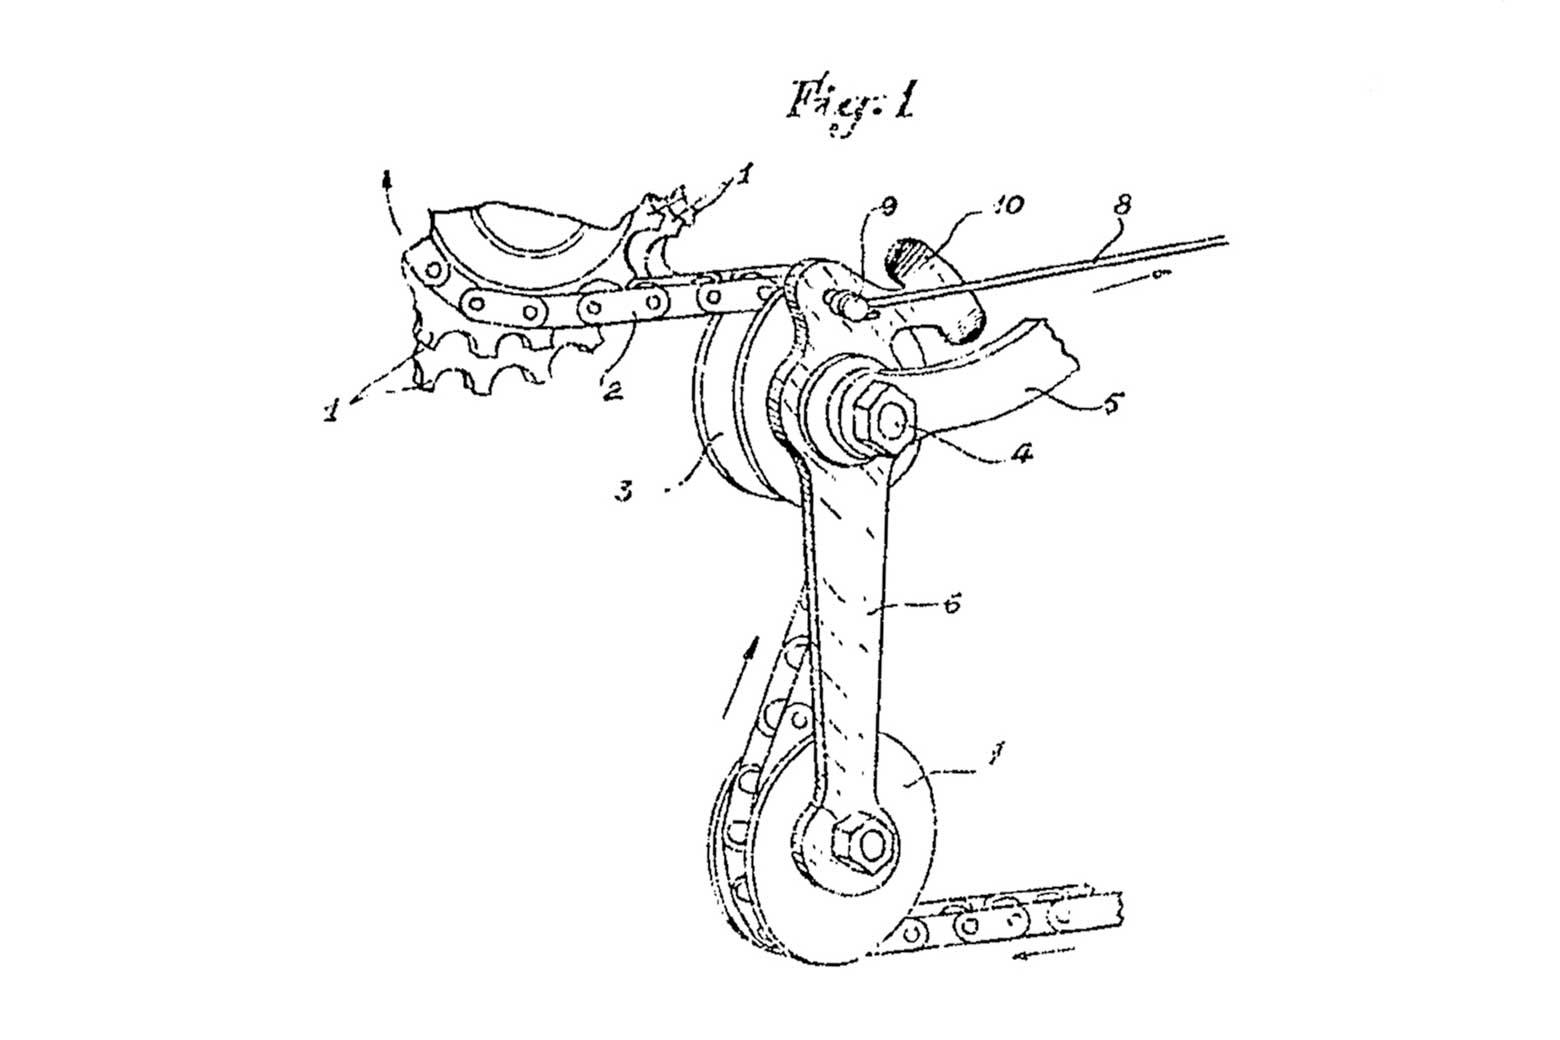 French Patent 915,334 - CMP Samson main image